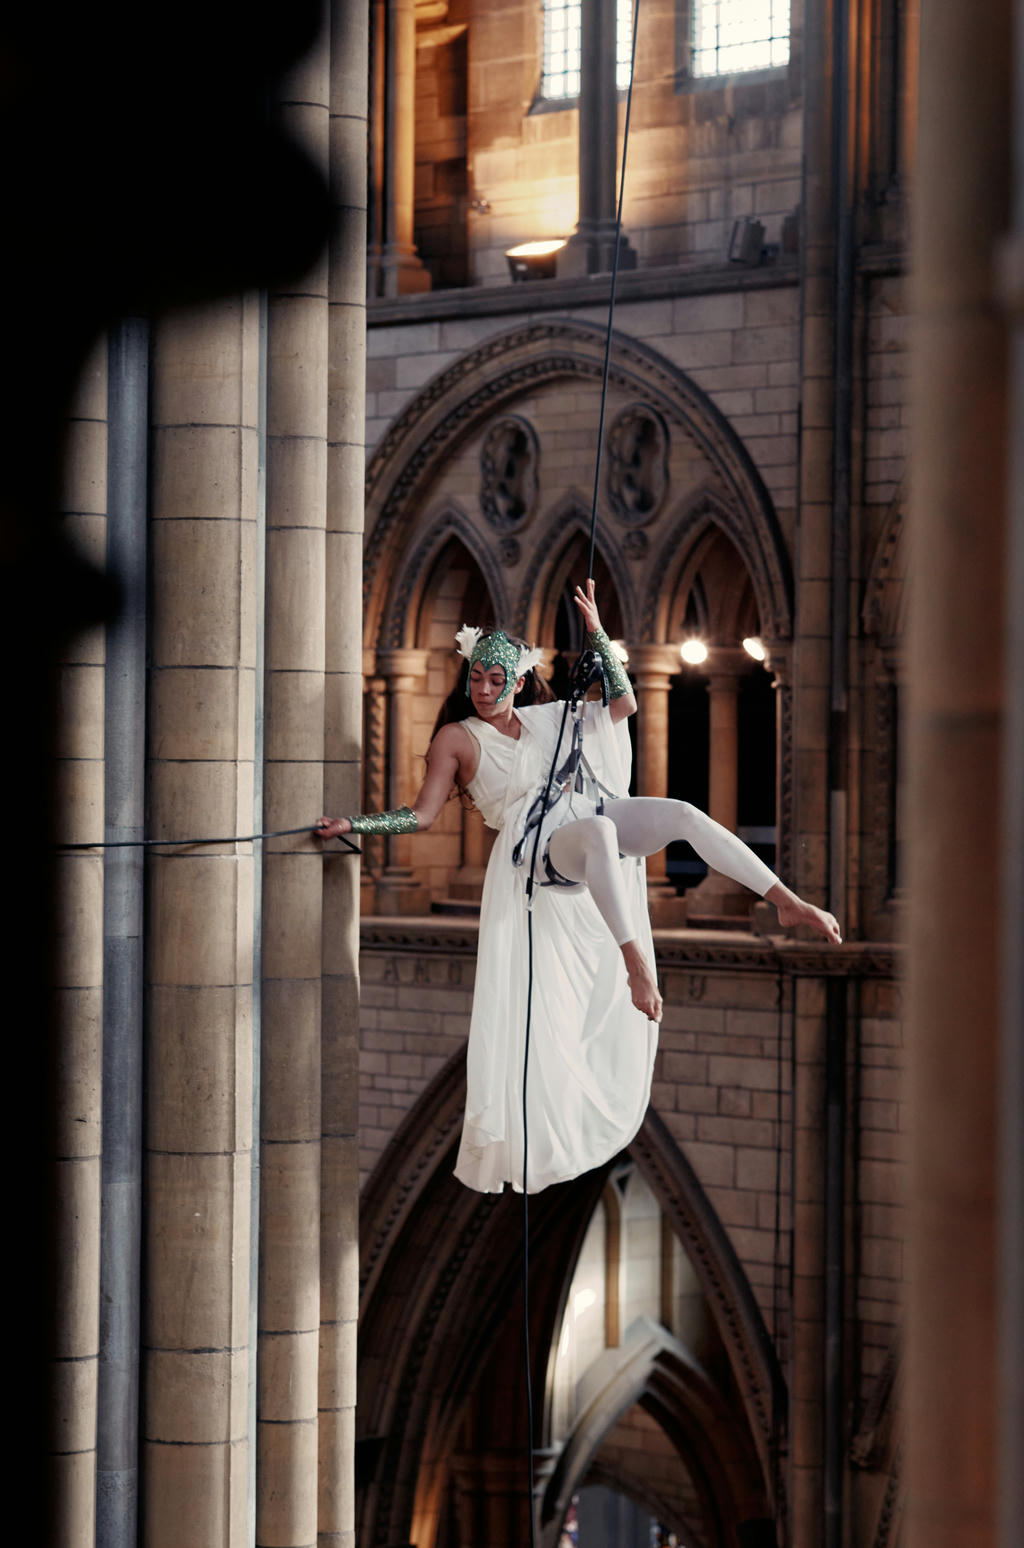 Ishita Raina from Yskynna Vertical Dance Company rehearsing in Truro Cathedral